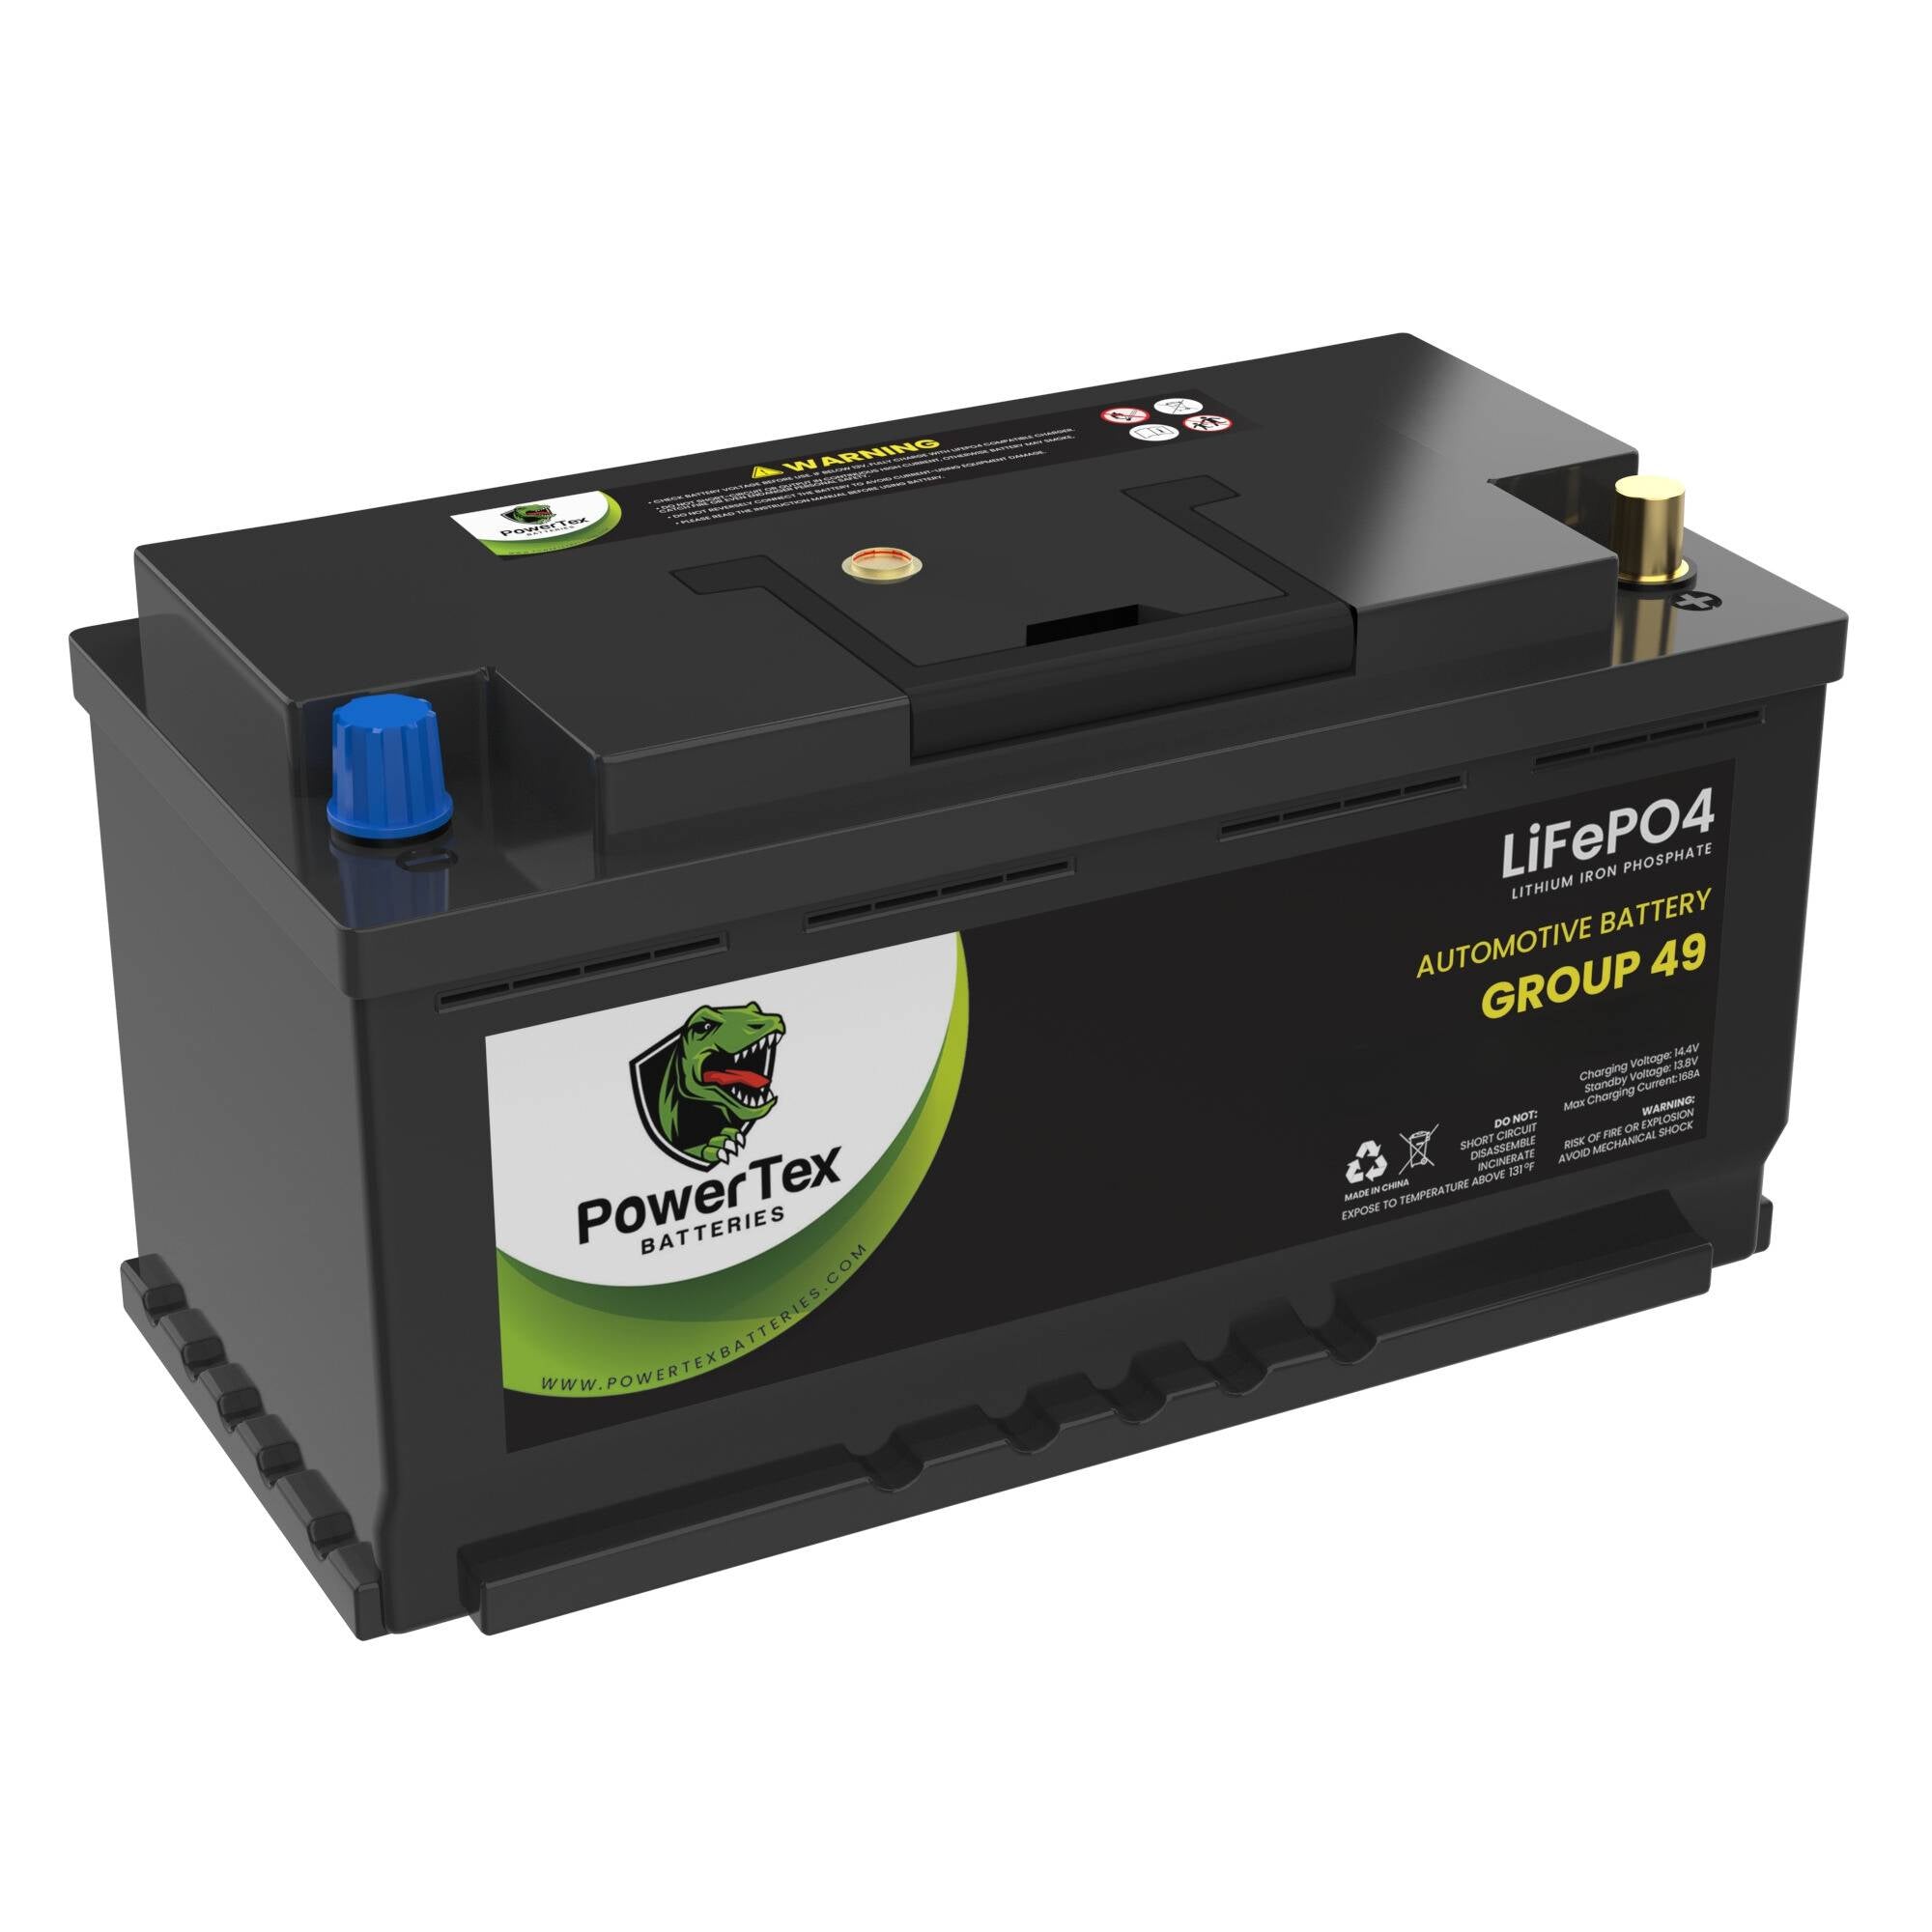 2018 Kia Stinger Car Battery BCI Group 49 / H8 Lithium LiFePO4 Automotive Battery